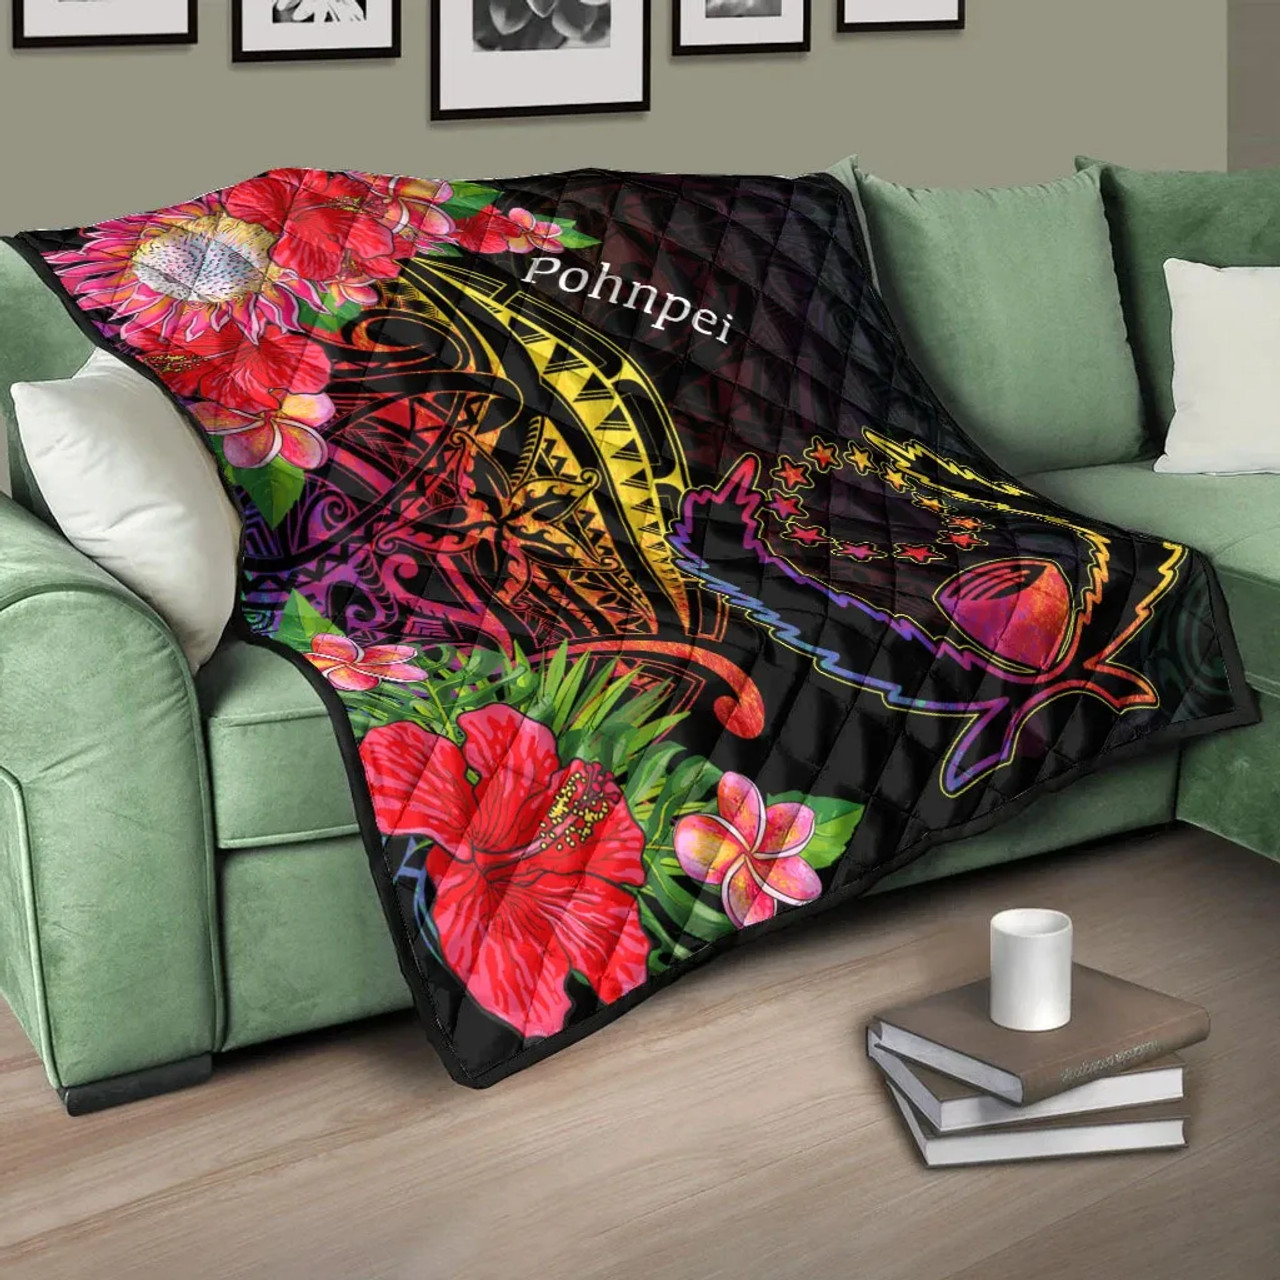 Pohnpei Premium Quilt - Tropical Hippie Style 10